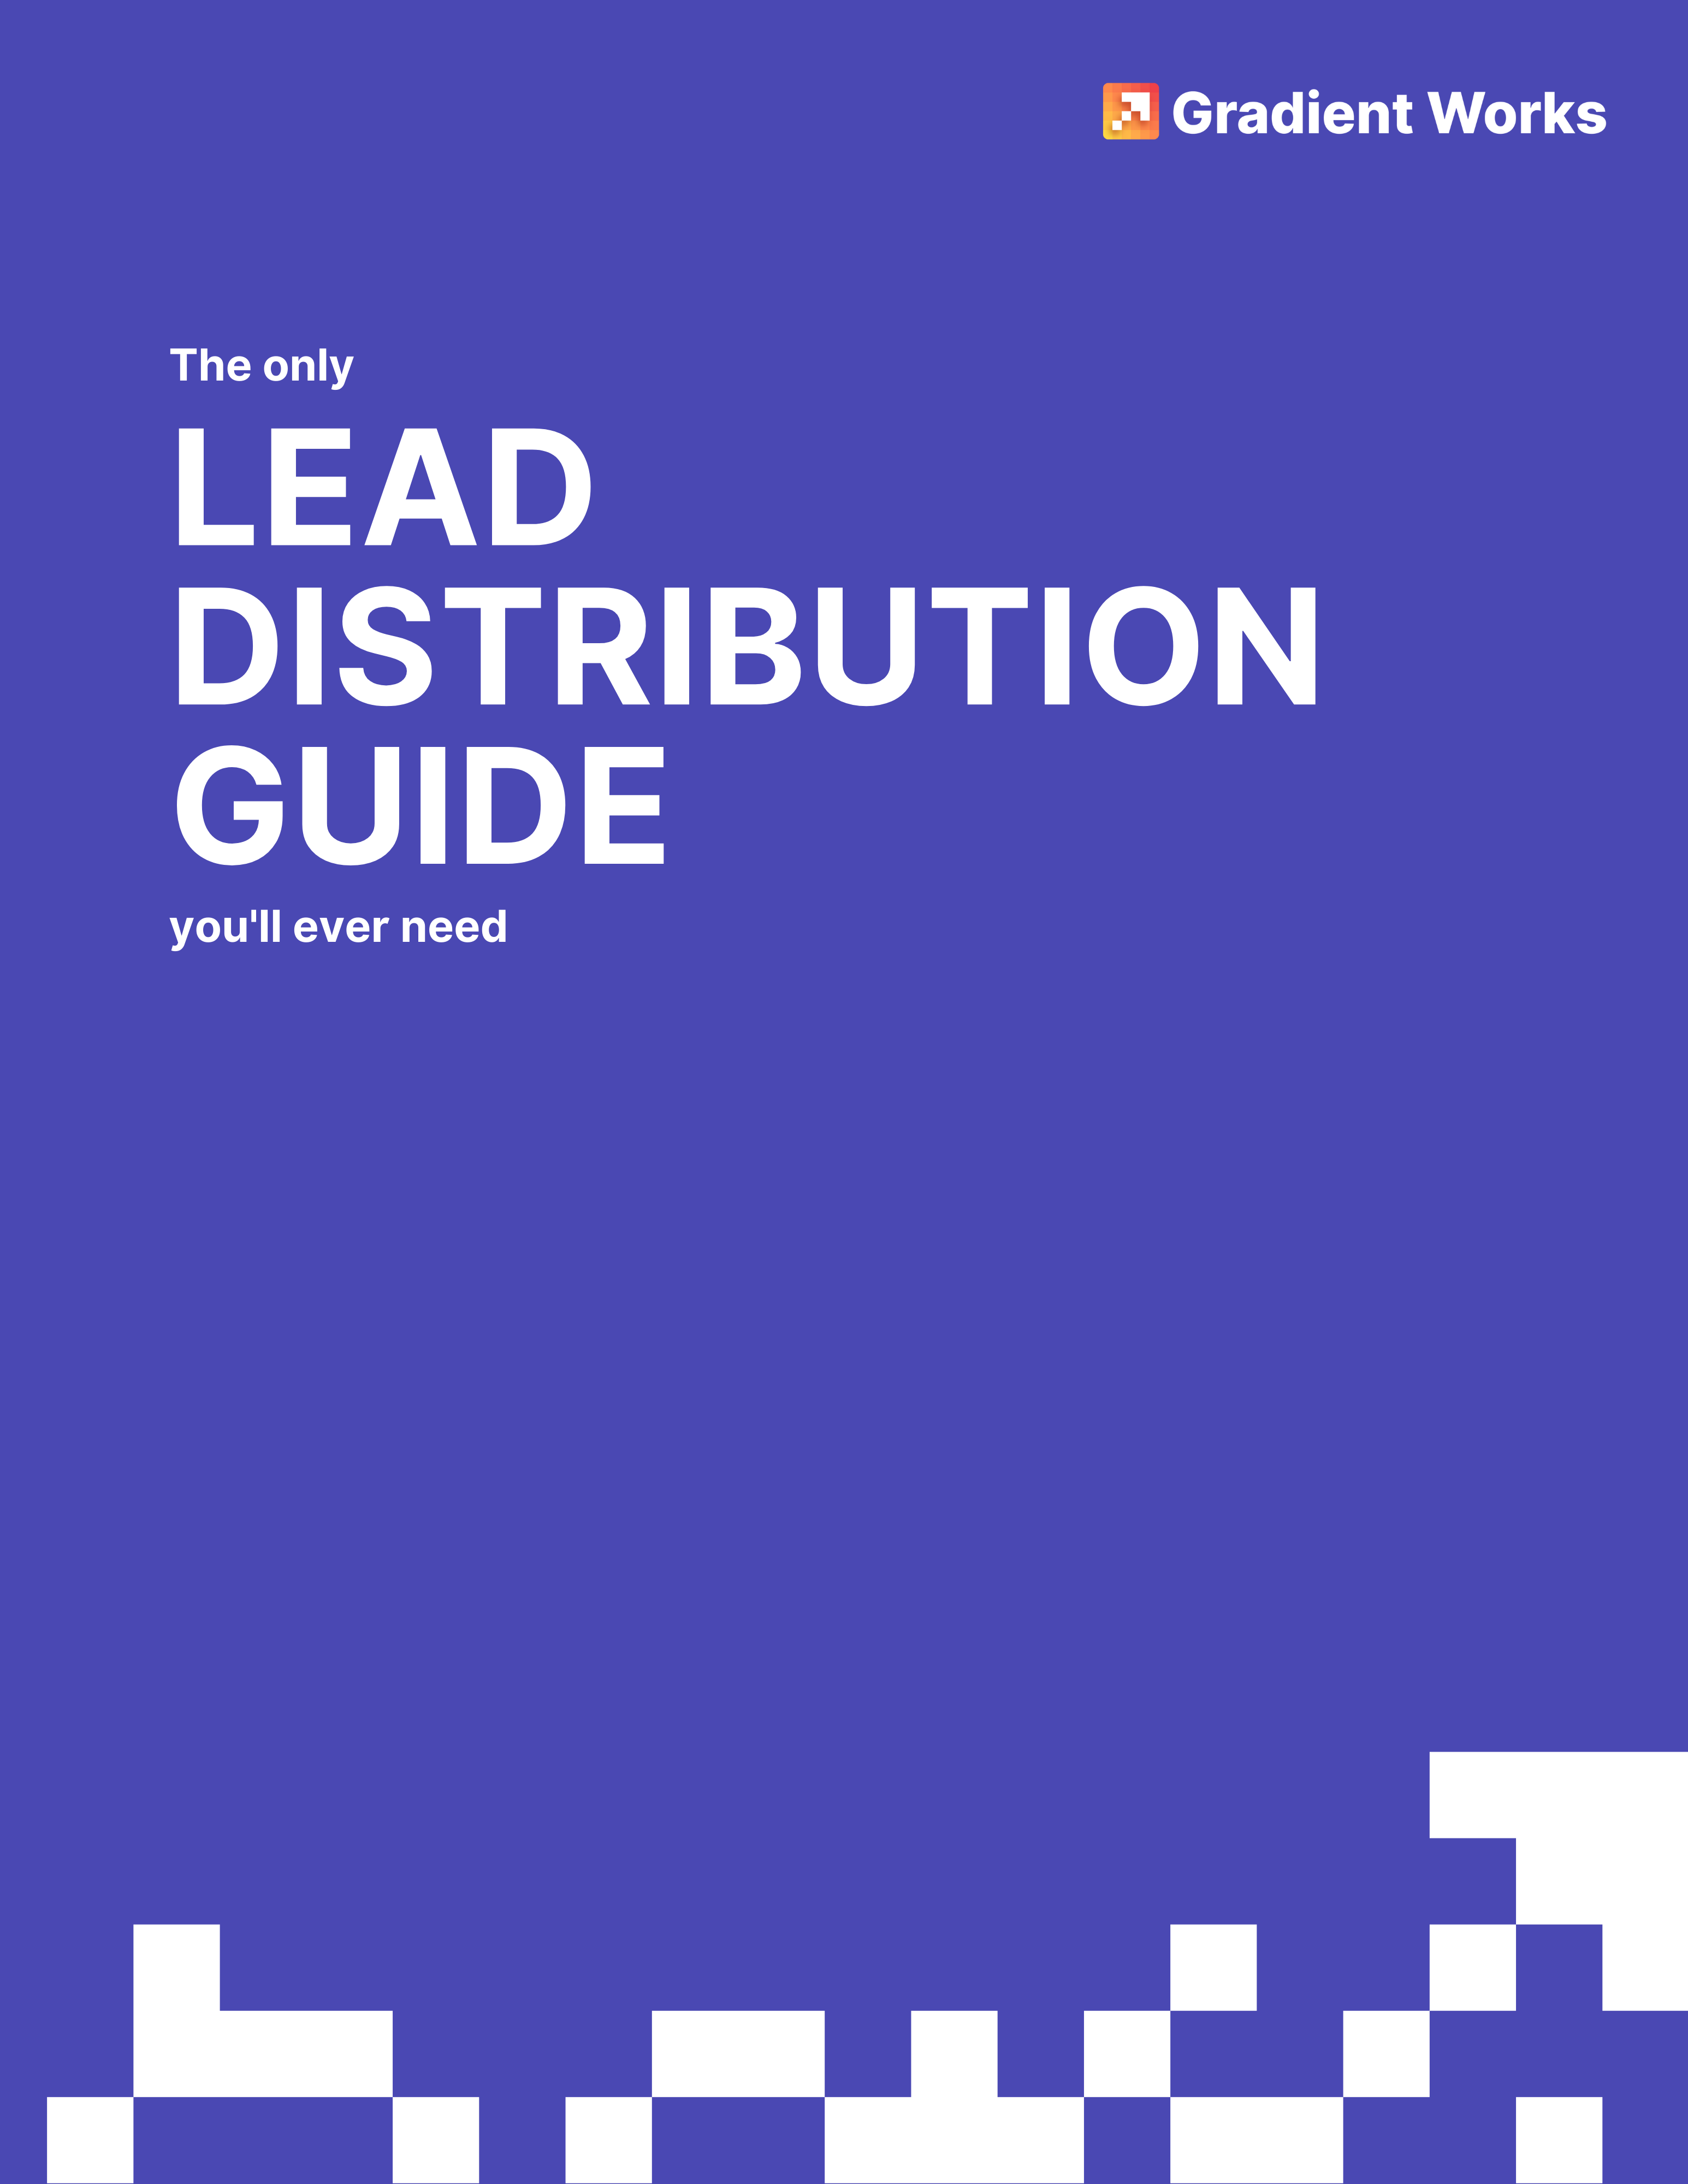 Lead distribution guide cover landscape